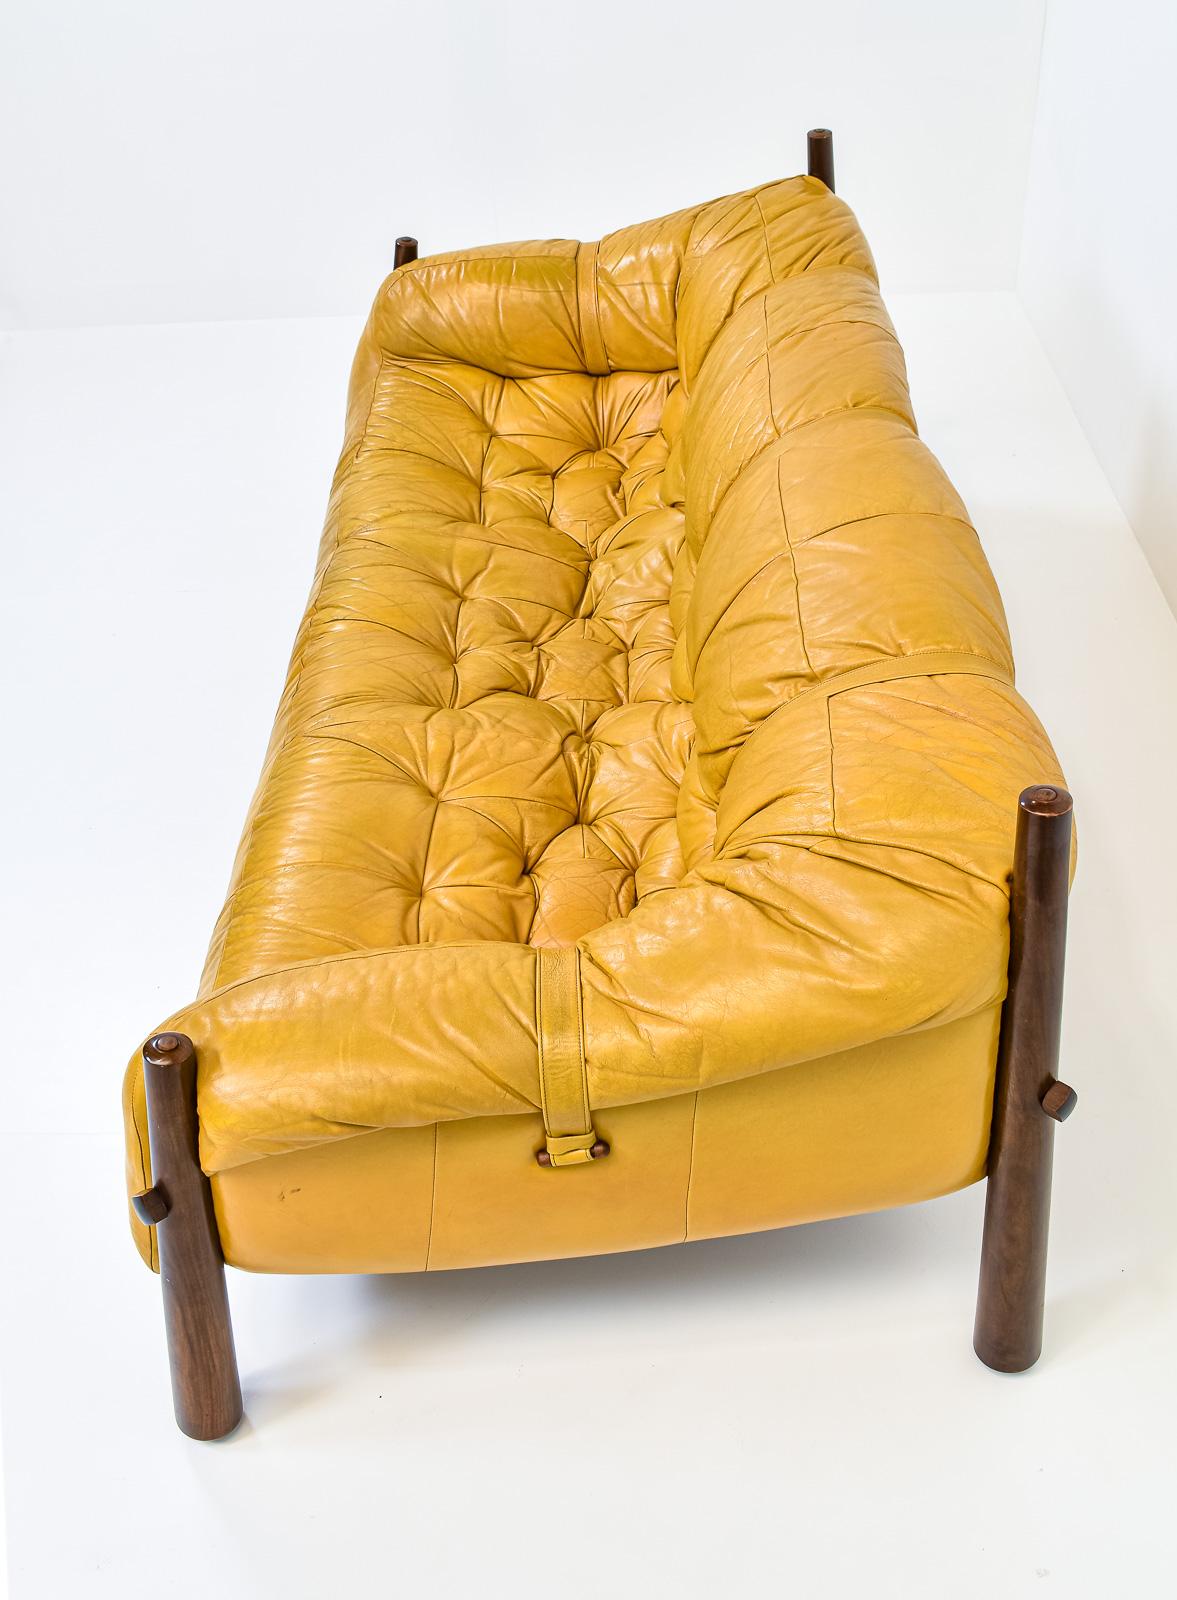 Brazilian Mustard Yellow Leather Three-Seater Sofa by Percival Lafer, model 'MP-81'